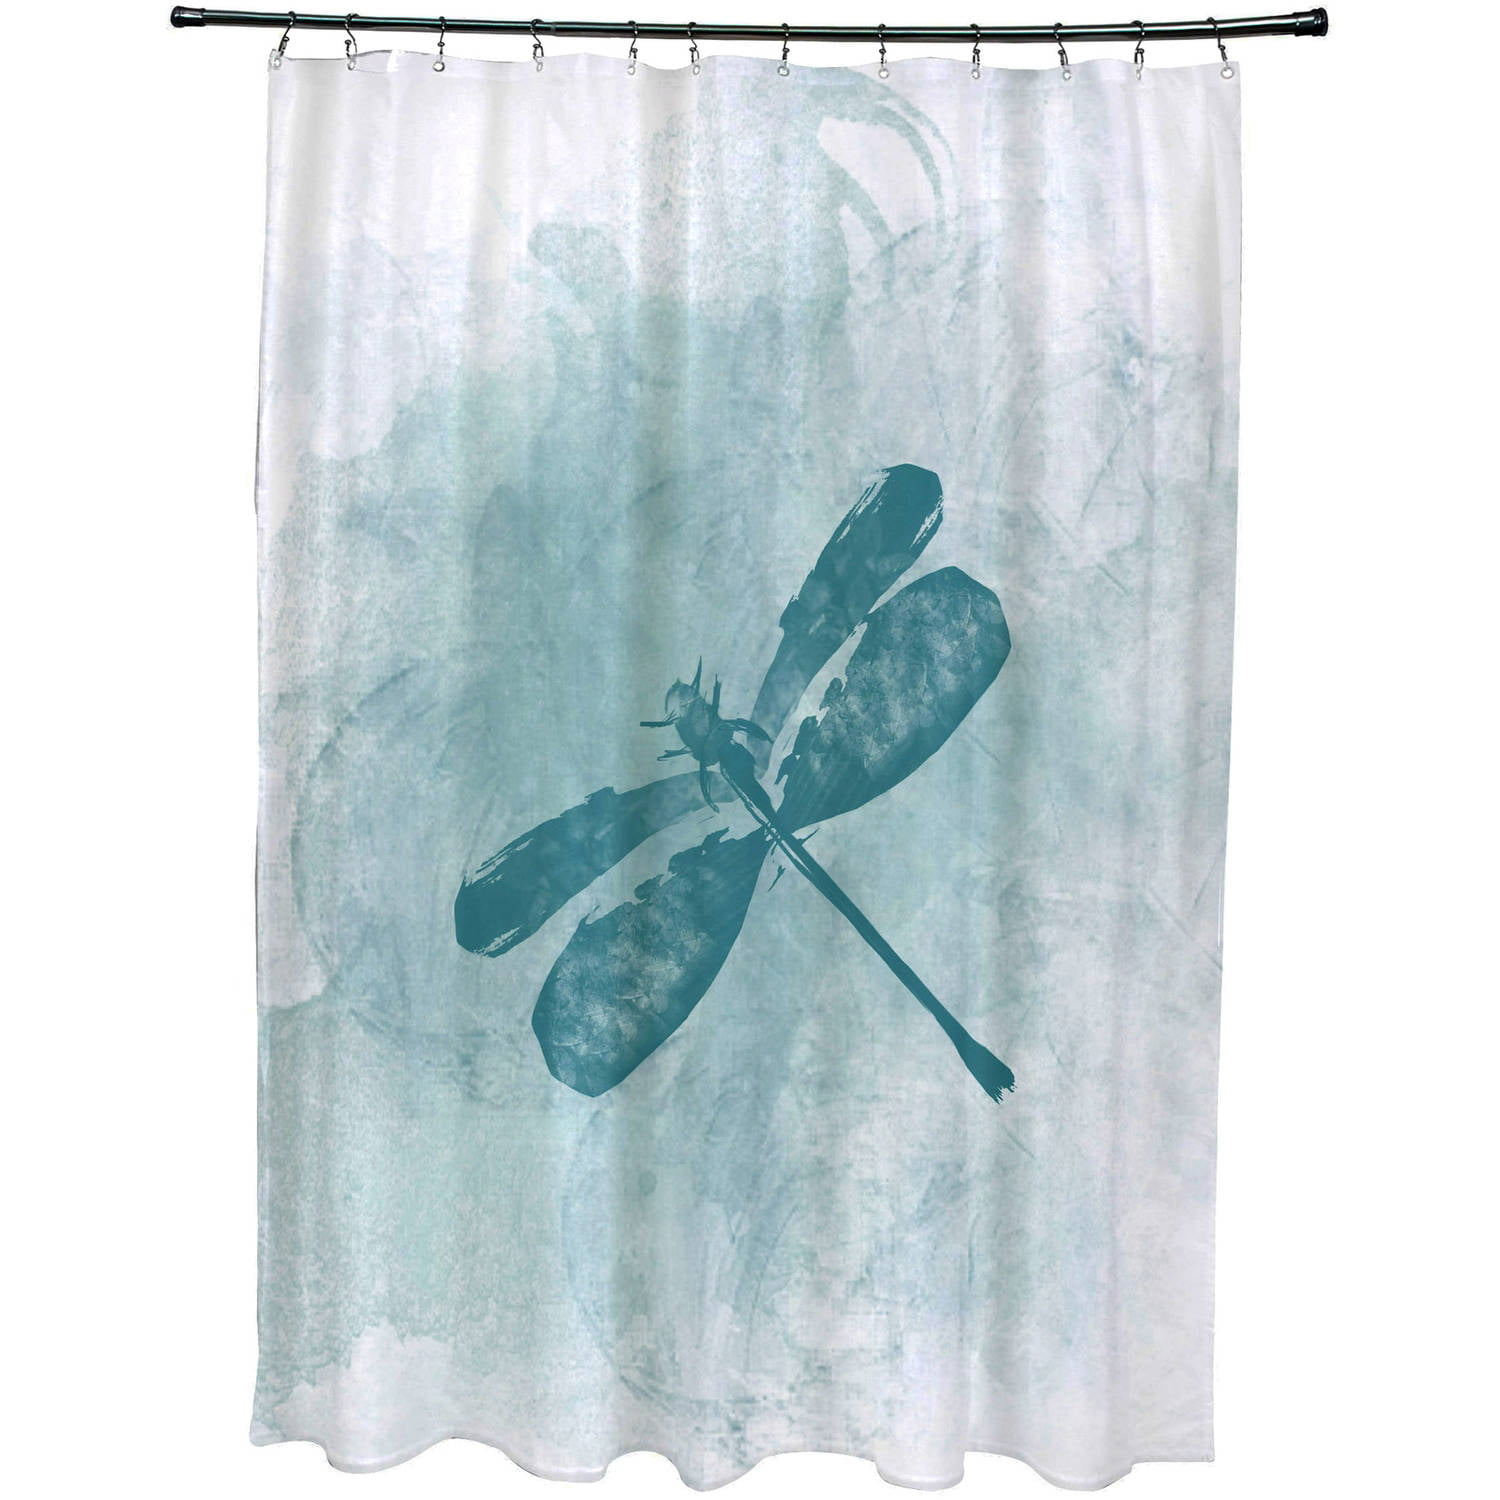 Dragonfly In The Rain Shower Curtain Bathroom Decor Fabric & 12hooks 71x71inches 